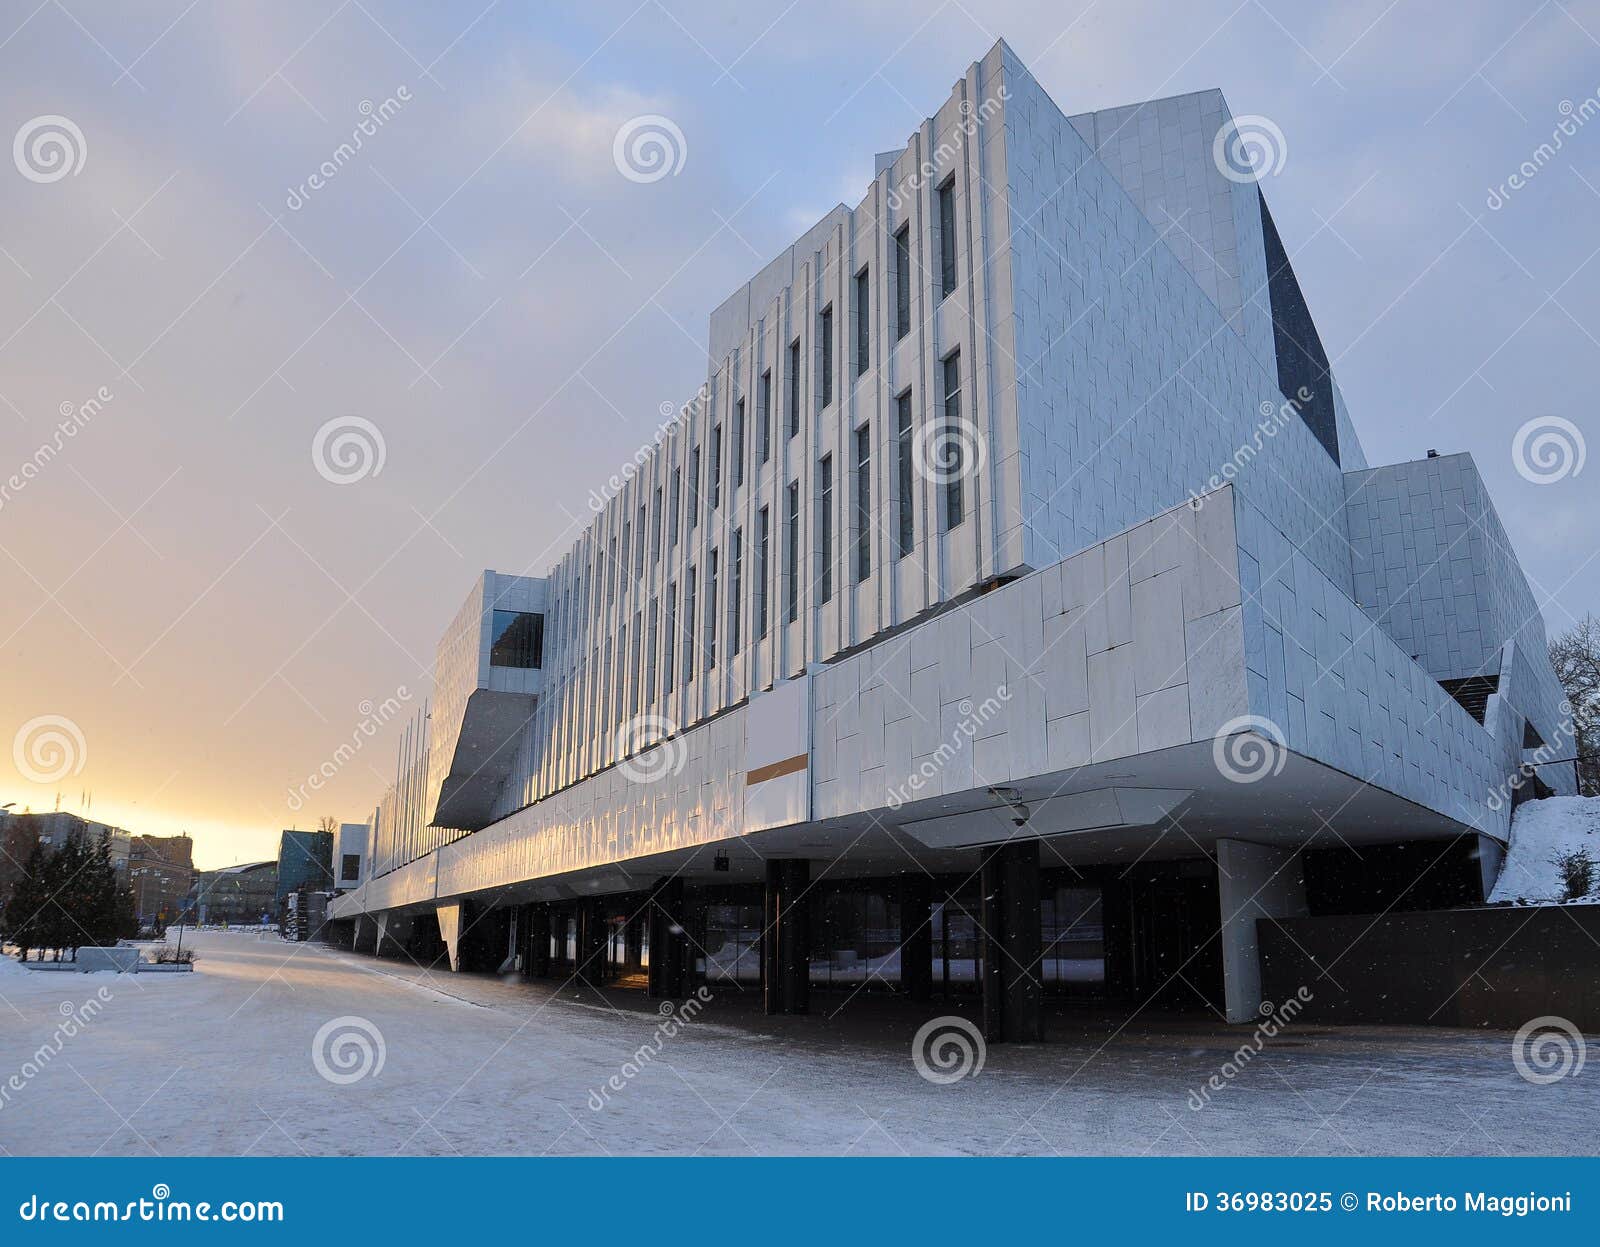 finlandia hall. modern architecture, helsinki, finland.